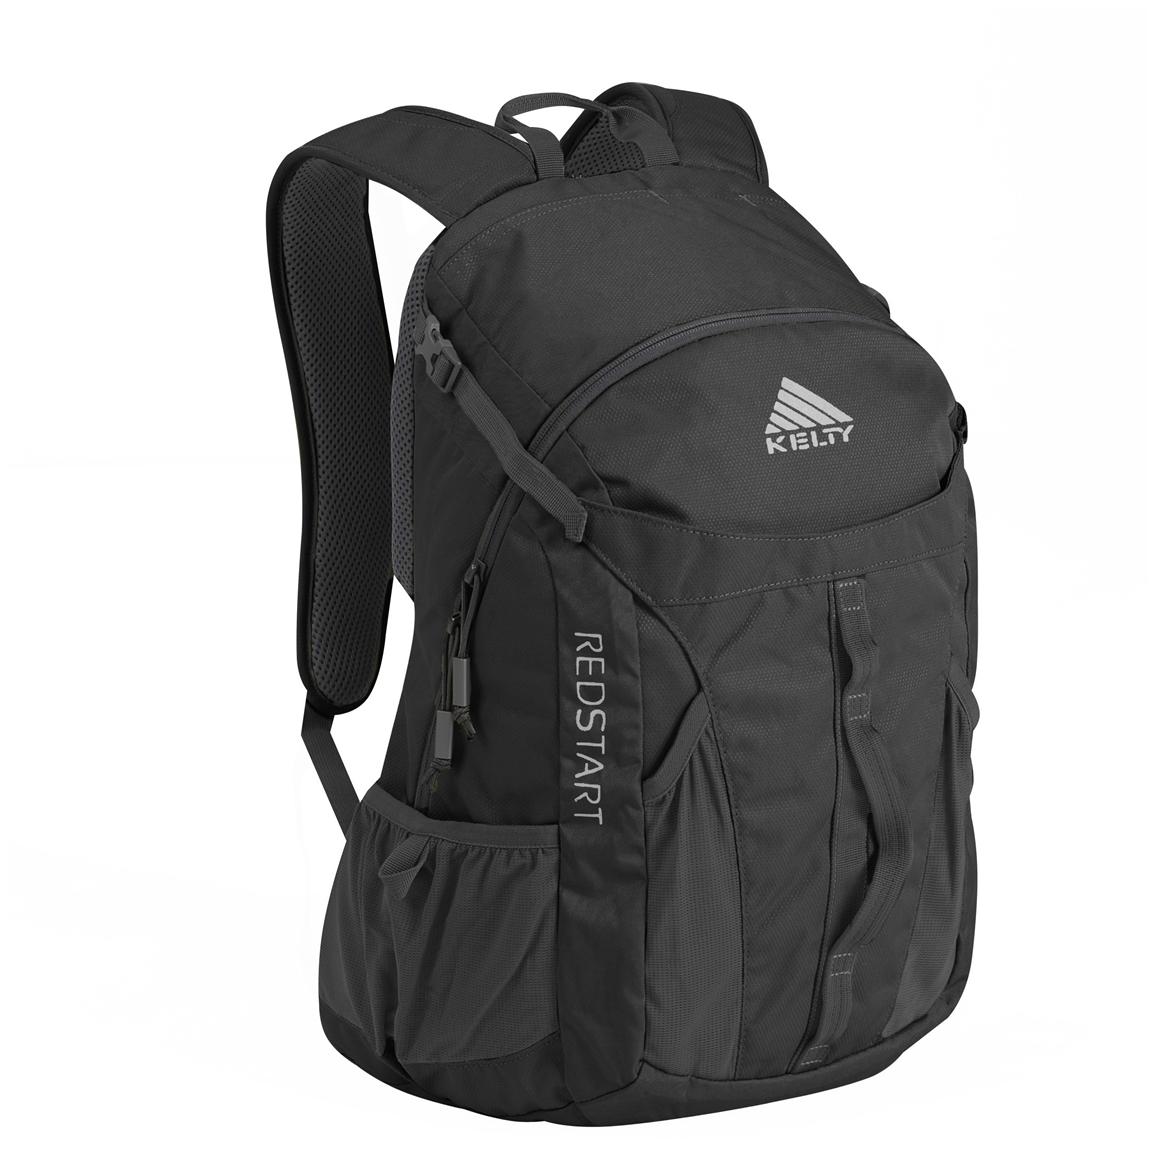 Kelty Redstart 28 Backpack - 597557, Camping Backpacks at Sportsman's Guide